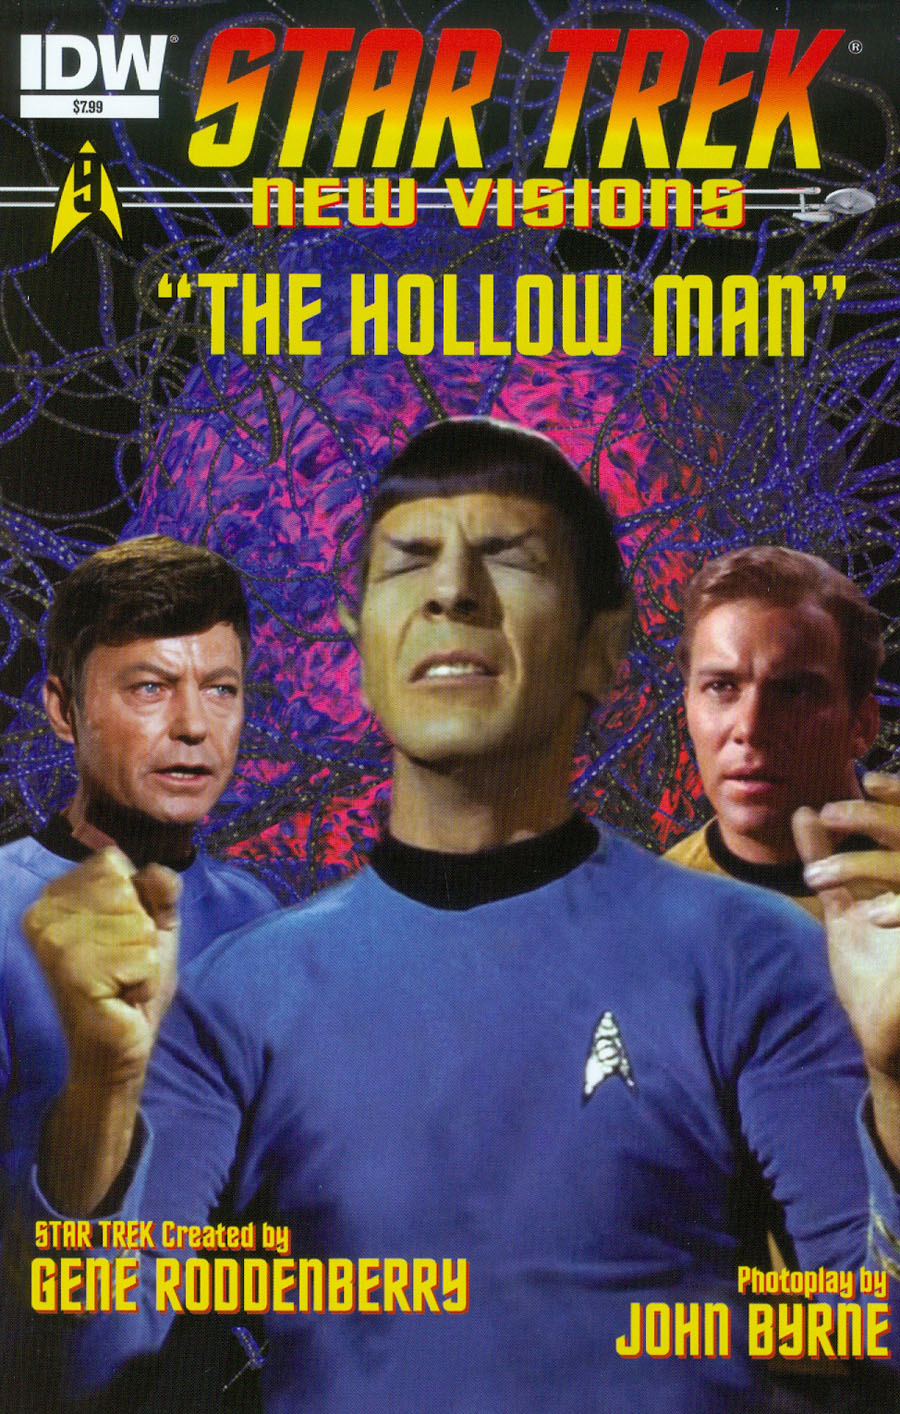 Star Trek New Visions #9 Hollow Man